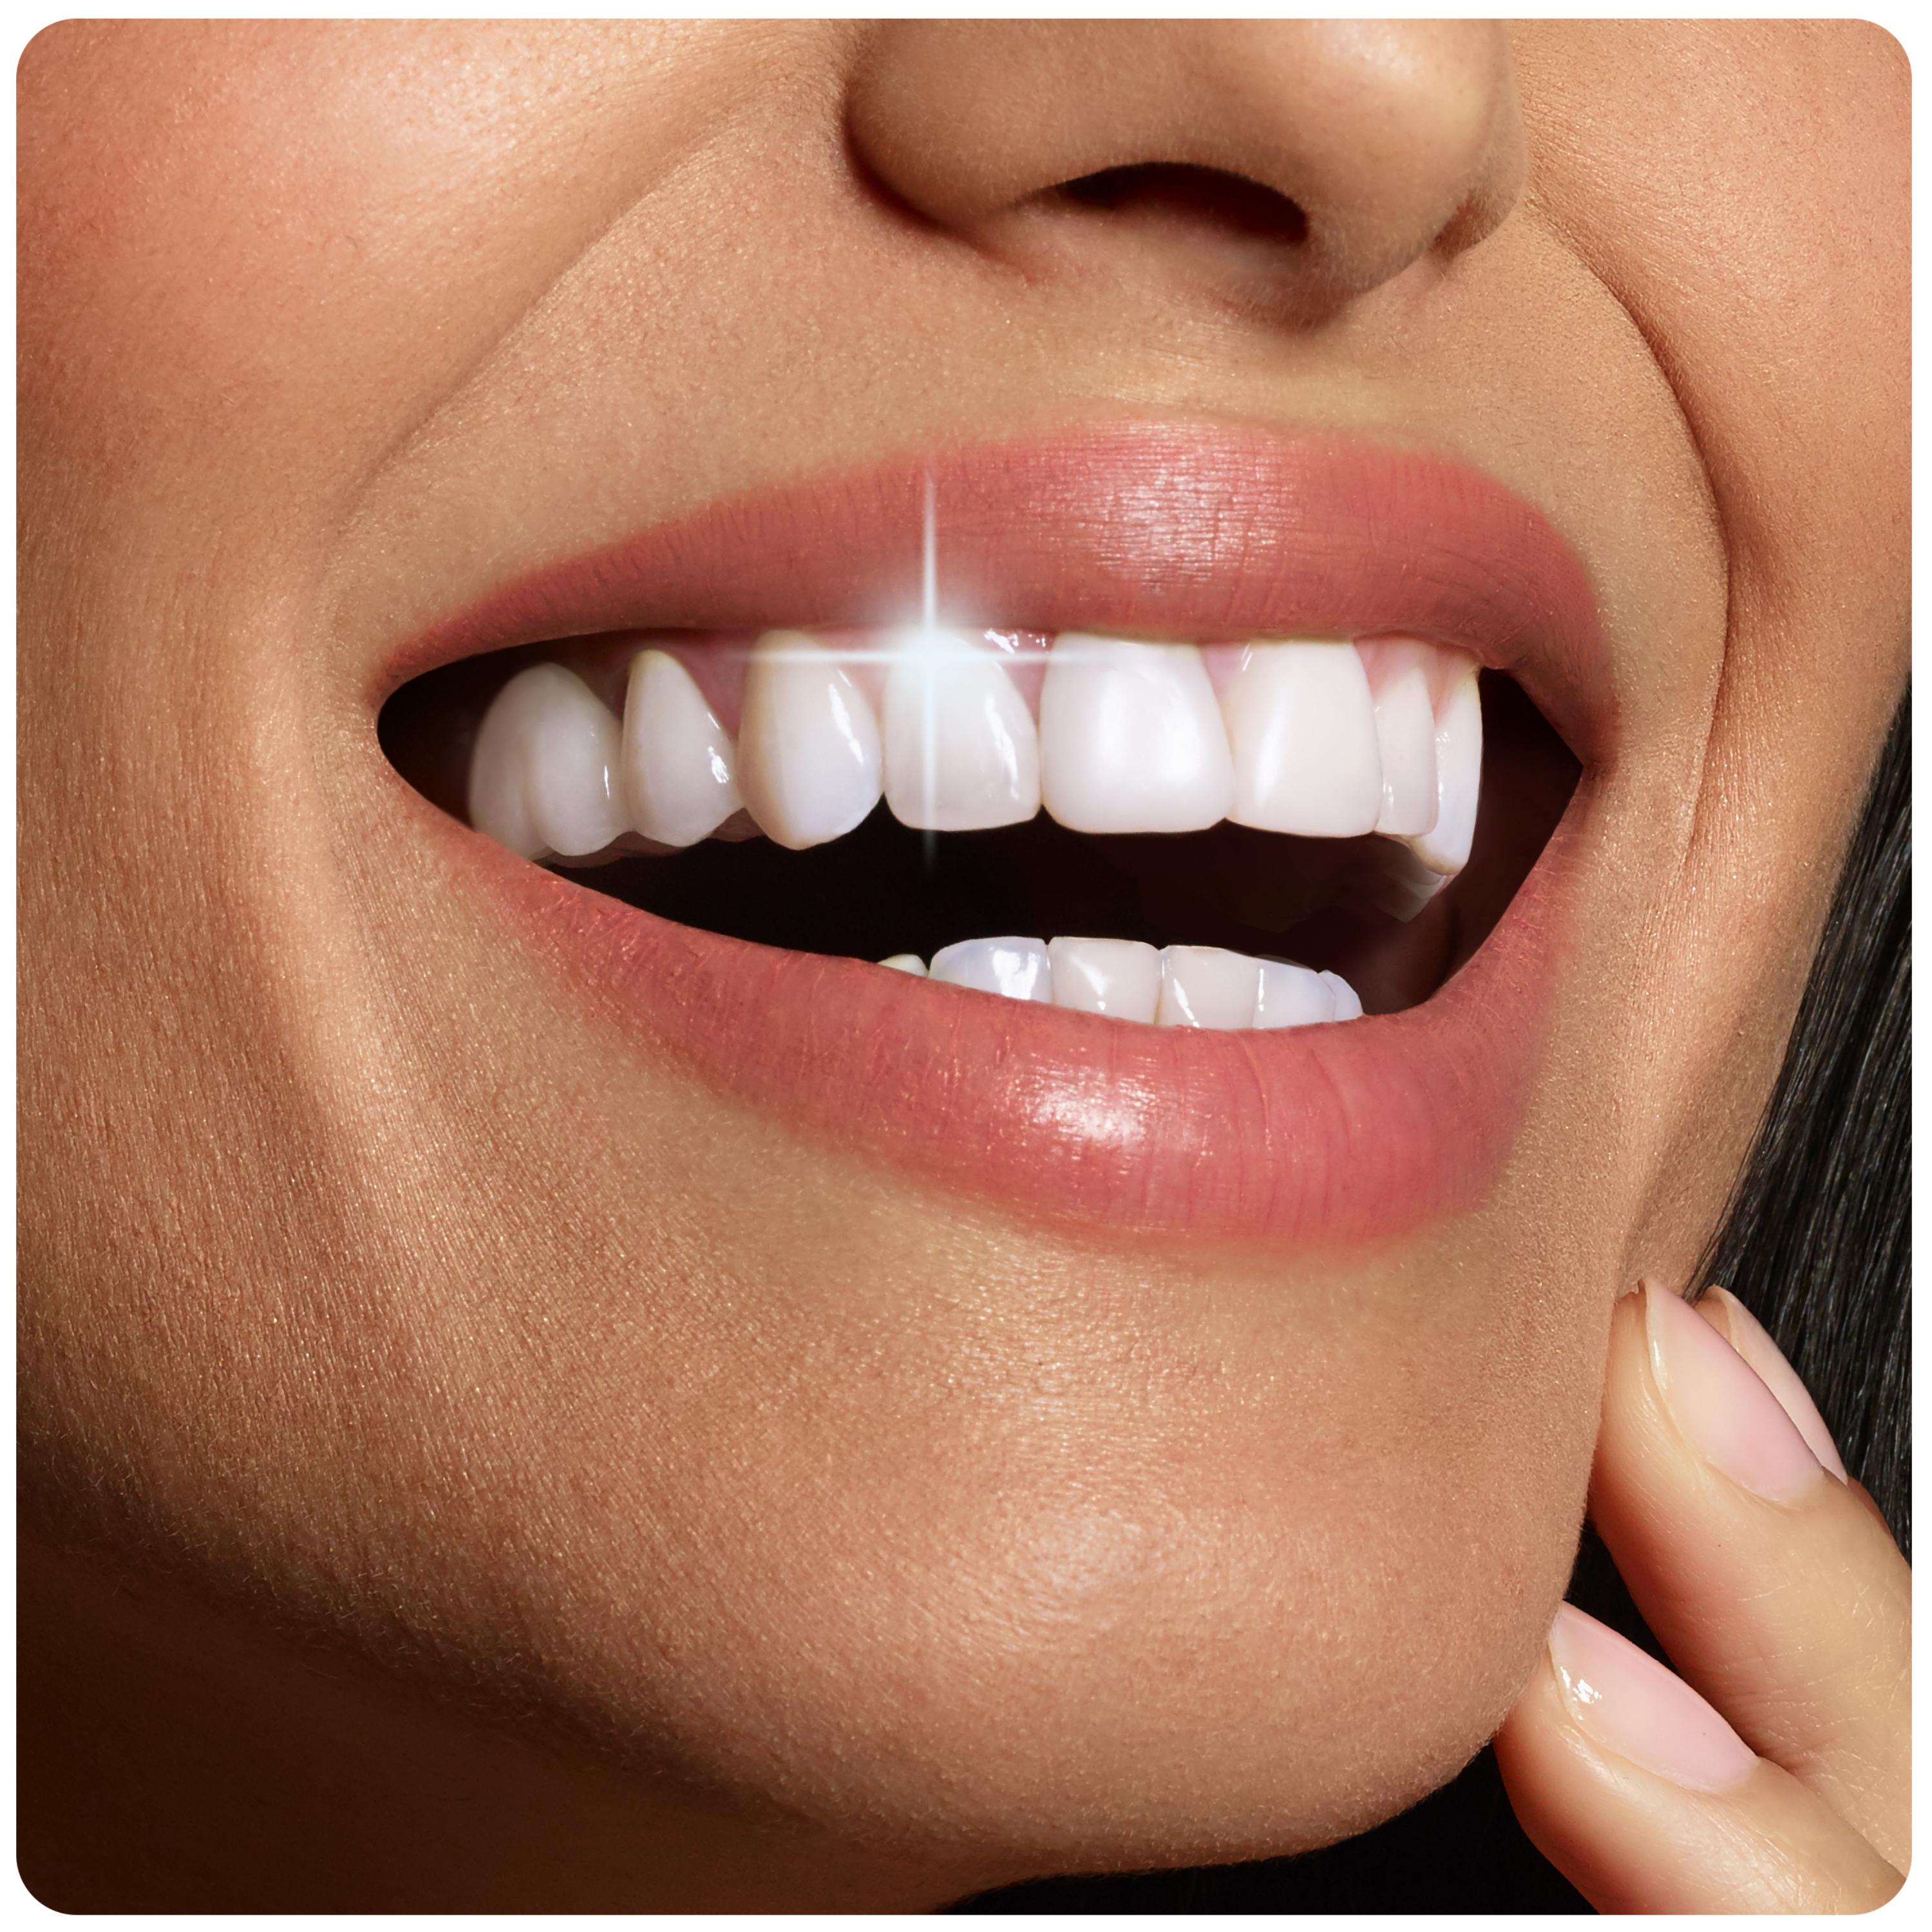 Crest 3D White Whitening Therapy Fluoride Toothpaste, Enamel, 4.1 oz - image 4 of 9